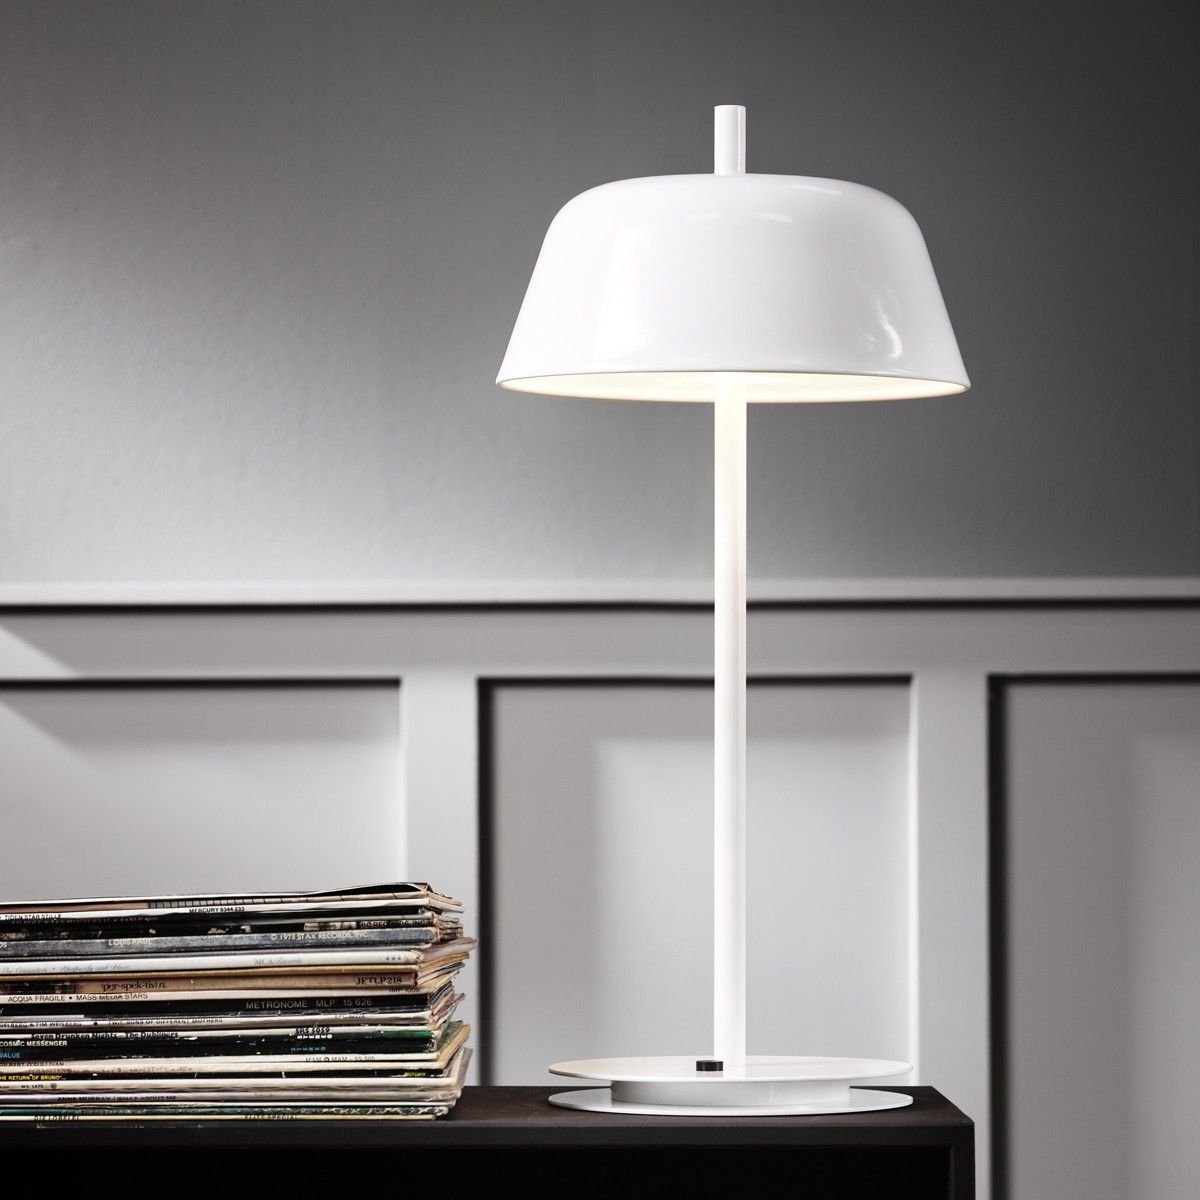 Style guaranteed 15 fantastic designer table lamps